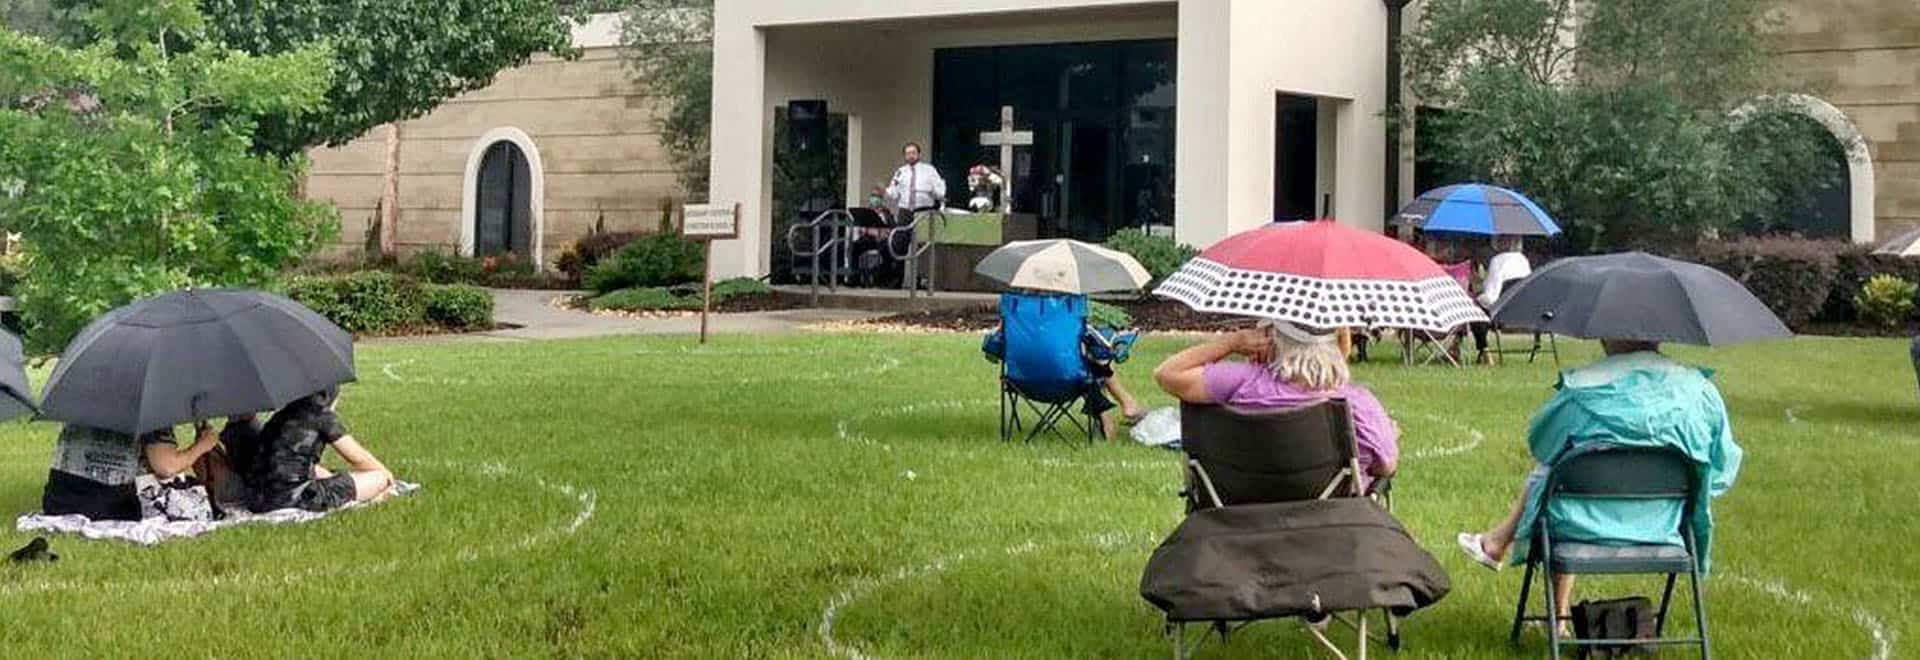 St. Paul’s United Methodist Church, Ocala, holds first outdoor service July 5. (SPUMC photo)
